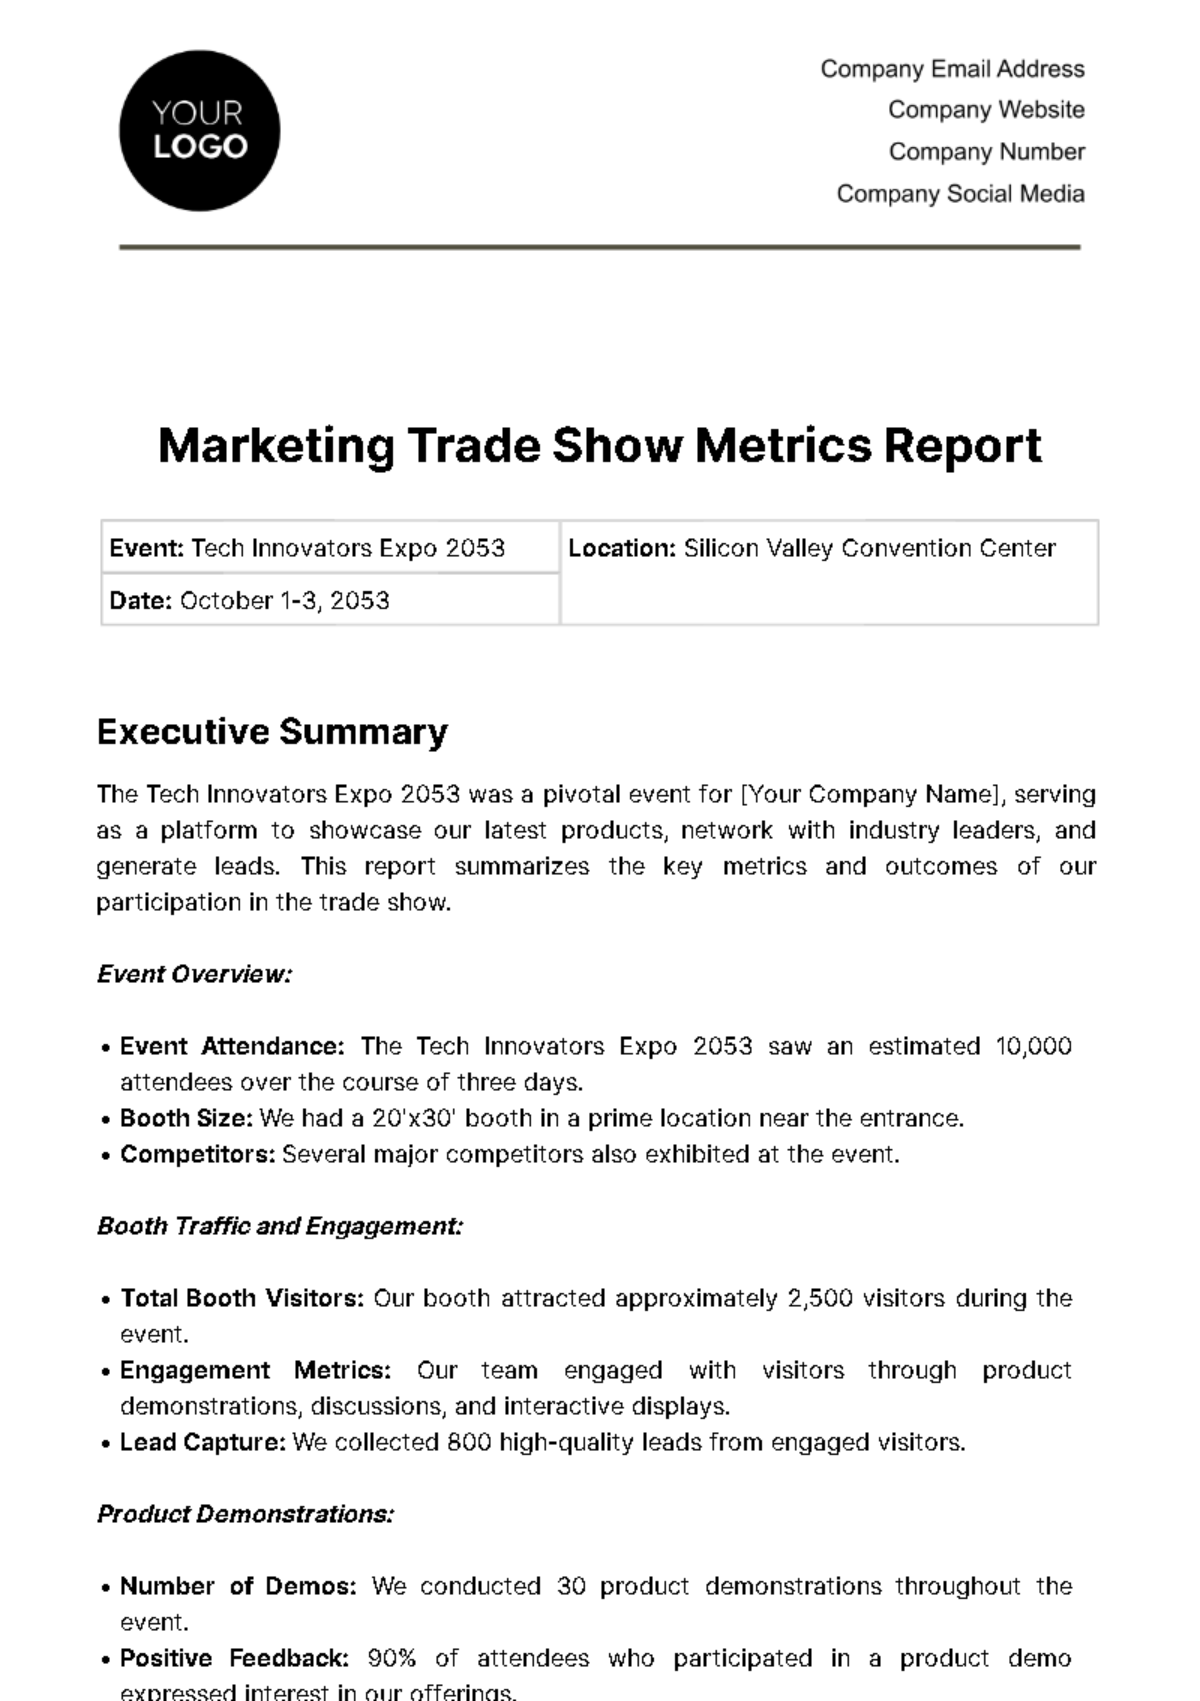 Free Marketing Trade Show Metrics Report Template